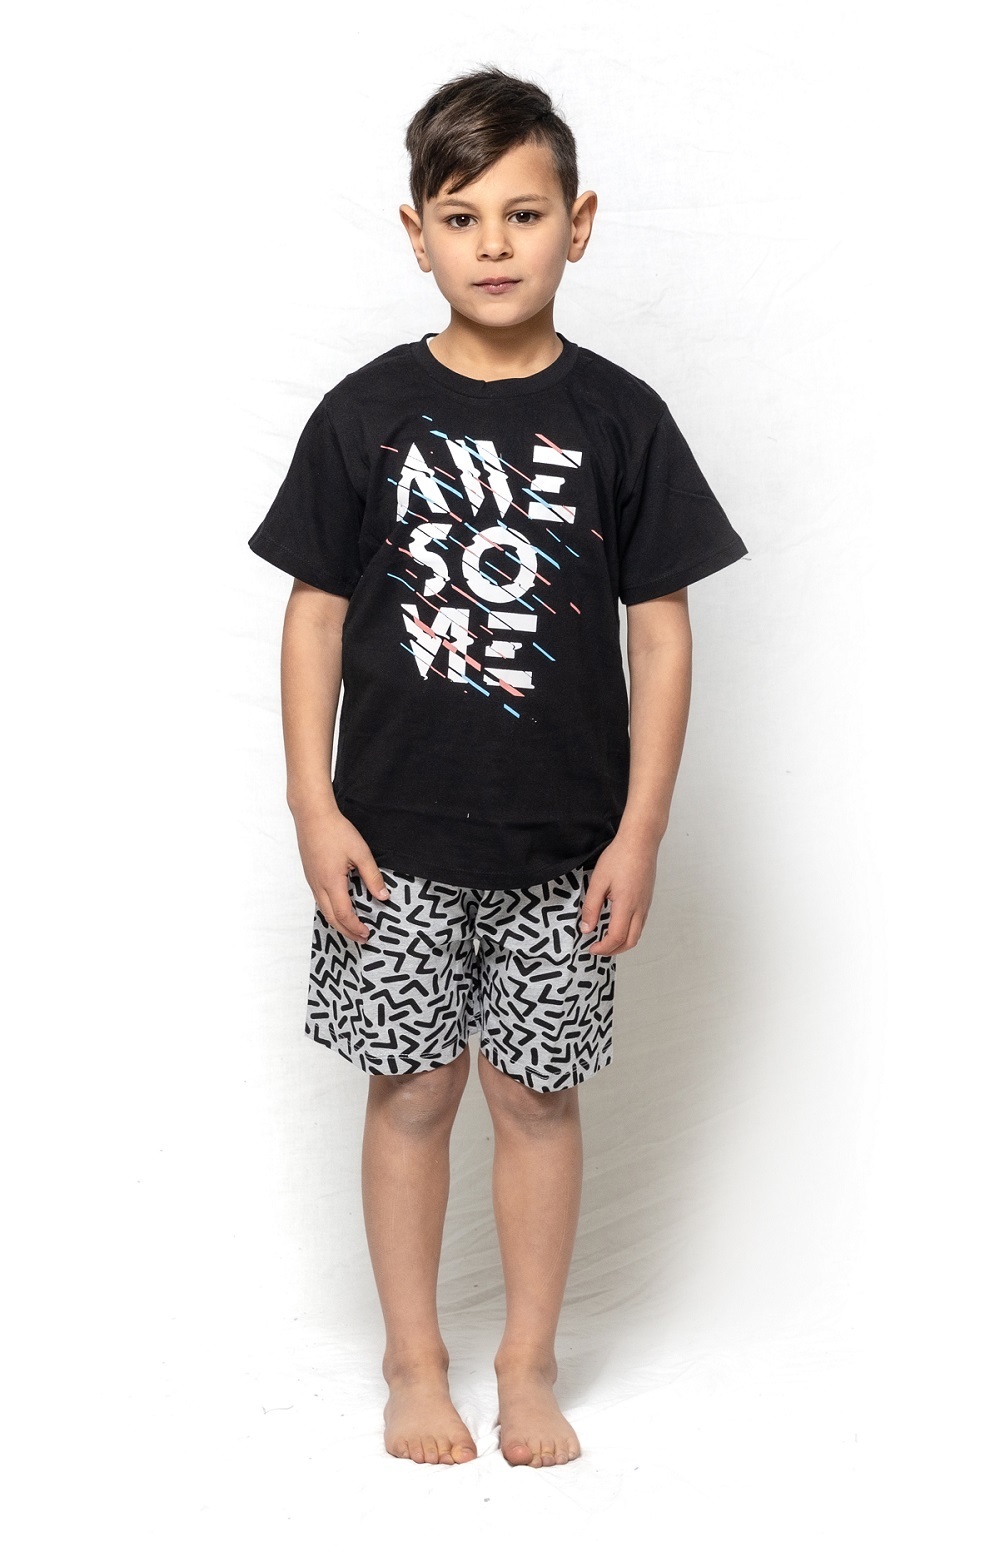 Boys PJS Sizes 8-14 Summer Cotton Short Sleeve Pyjamas Black Awesome